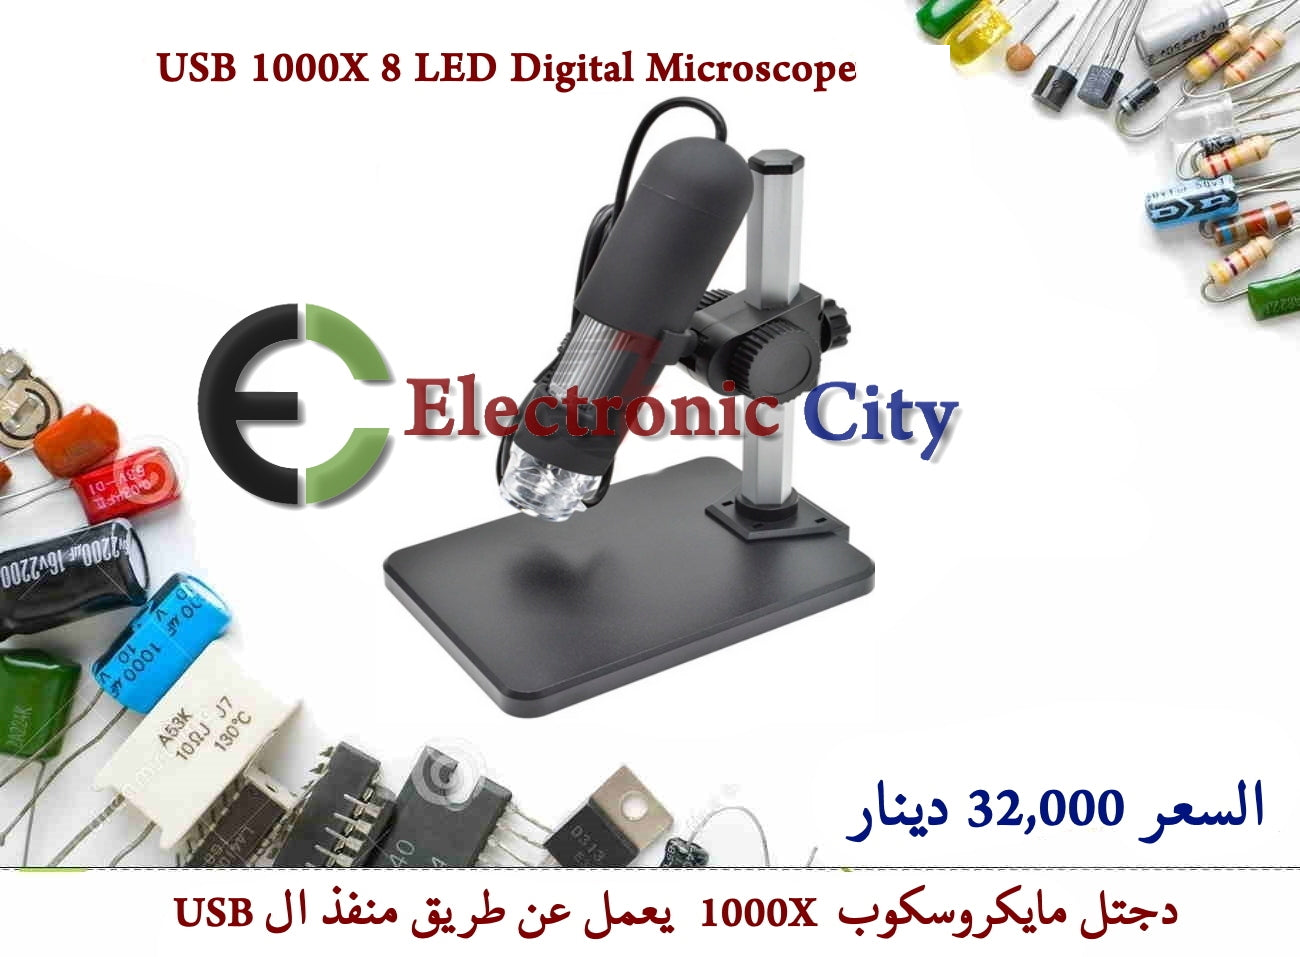 USB 1000X 8 LED Digital Microscope